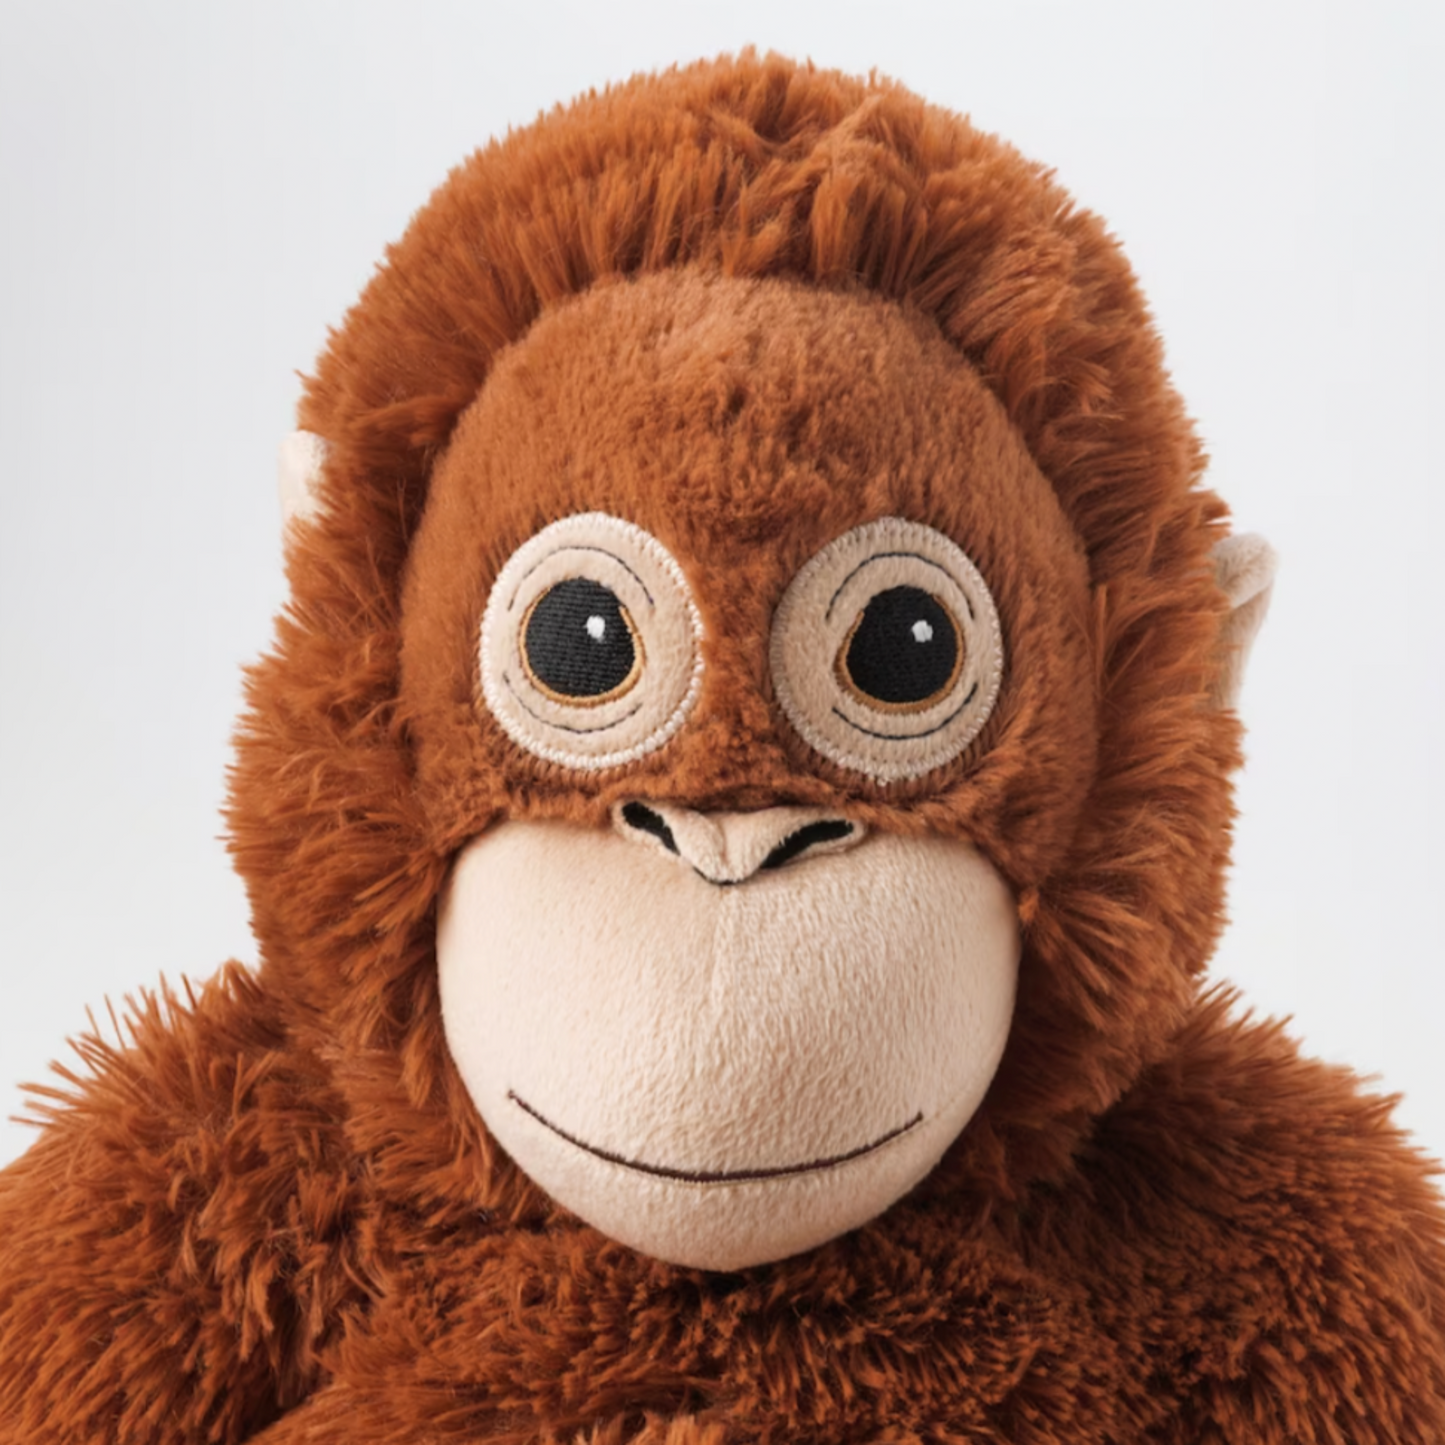 IKEA Djungelskog Orangutan Soft Toy (4450440249409)